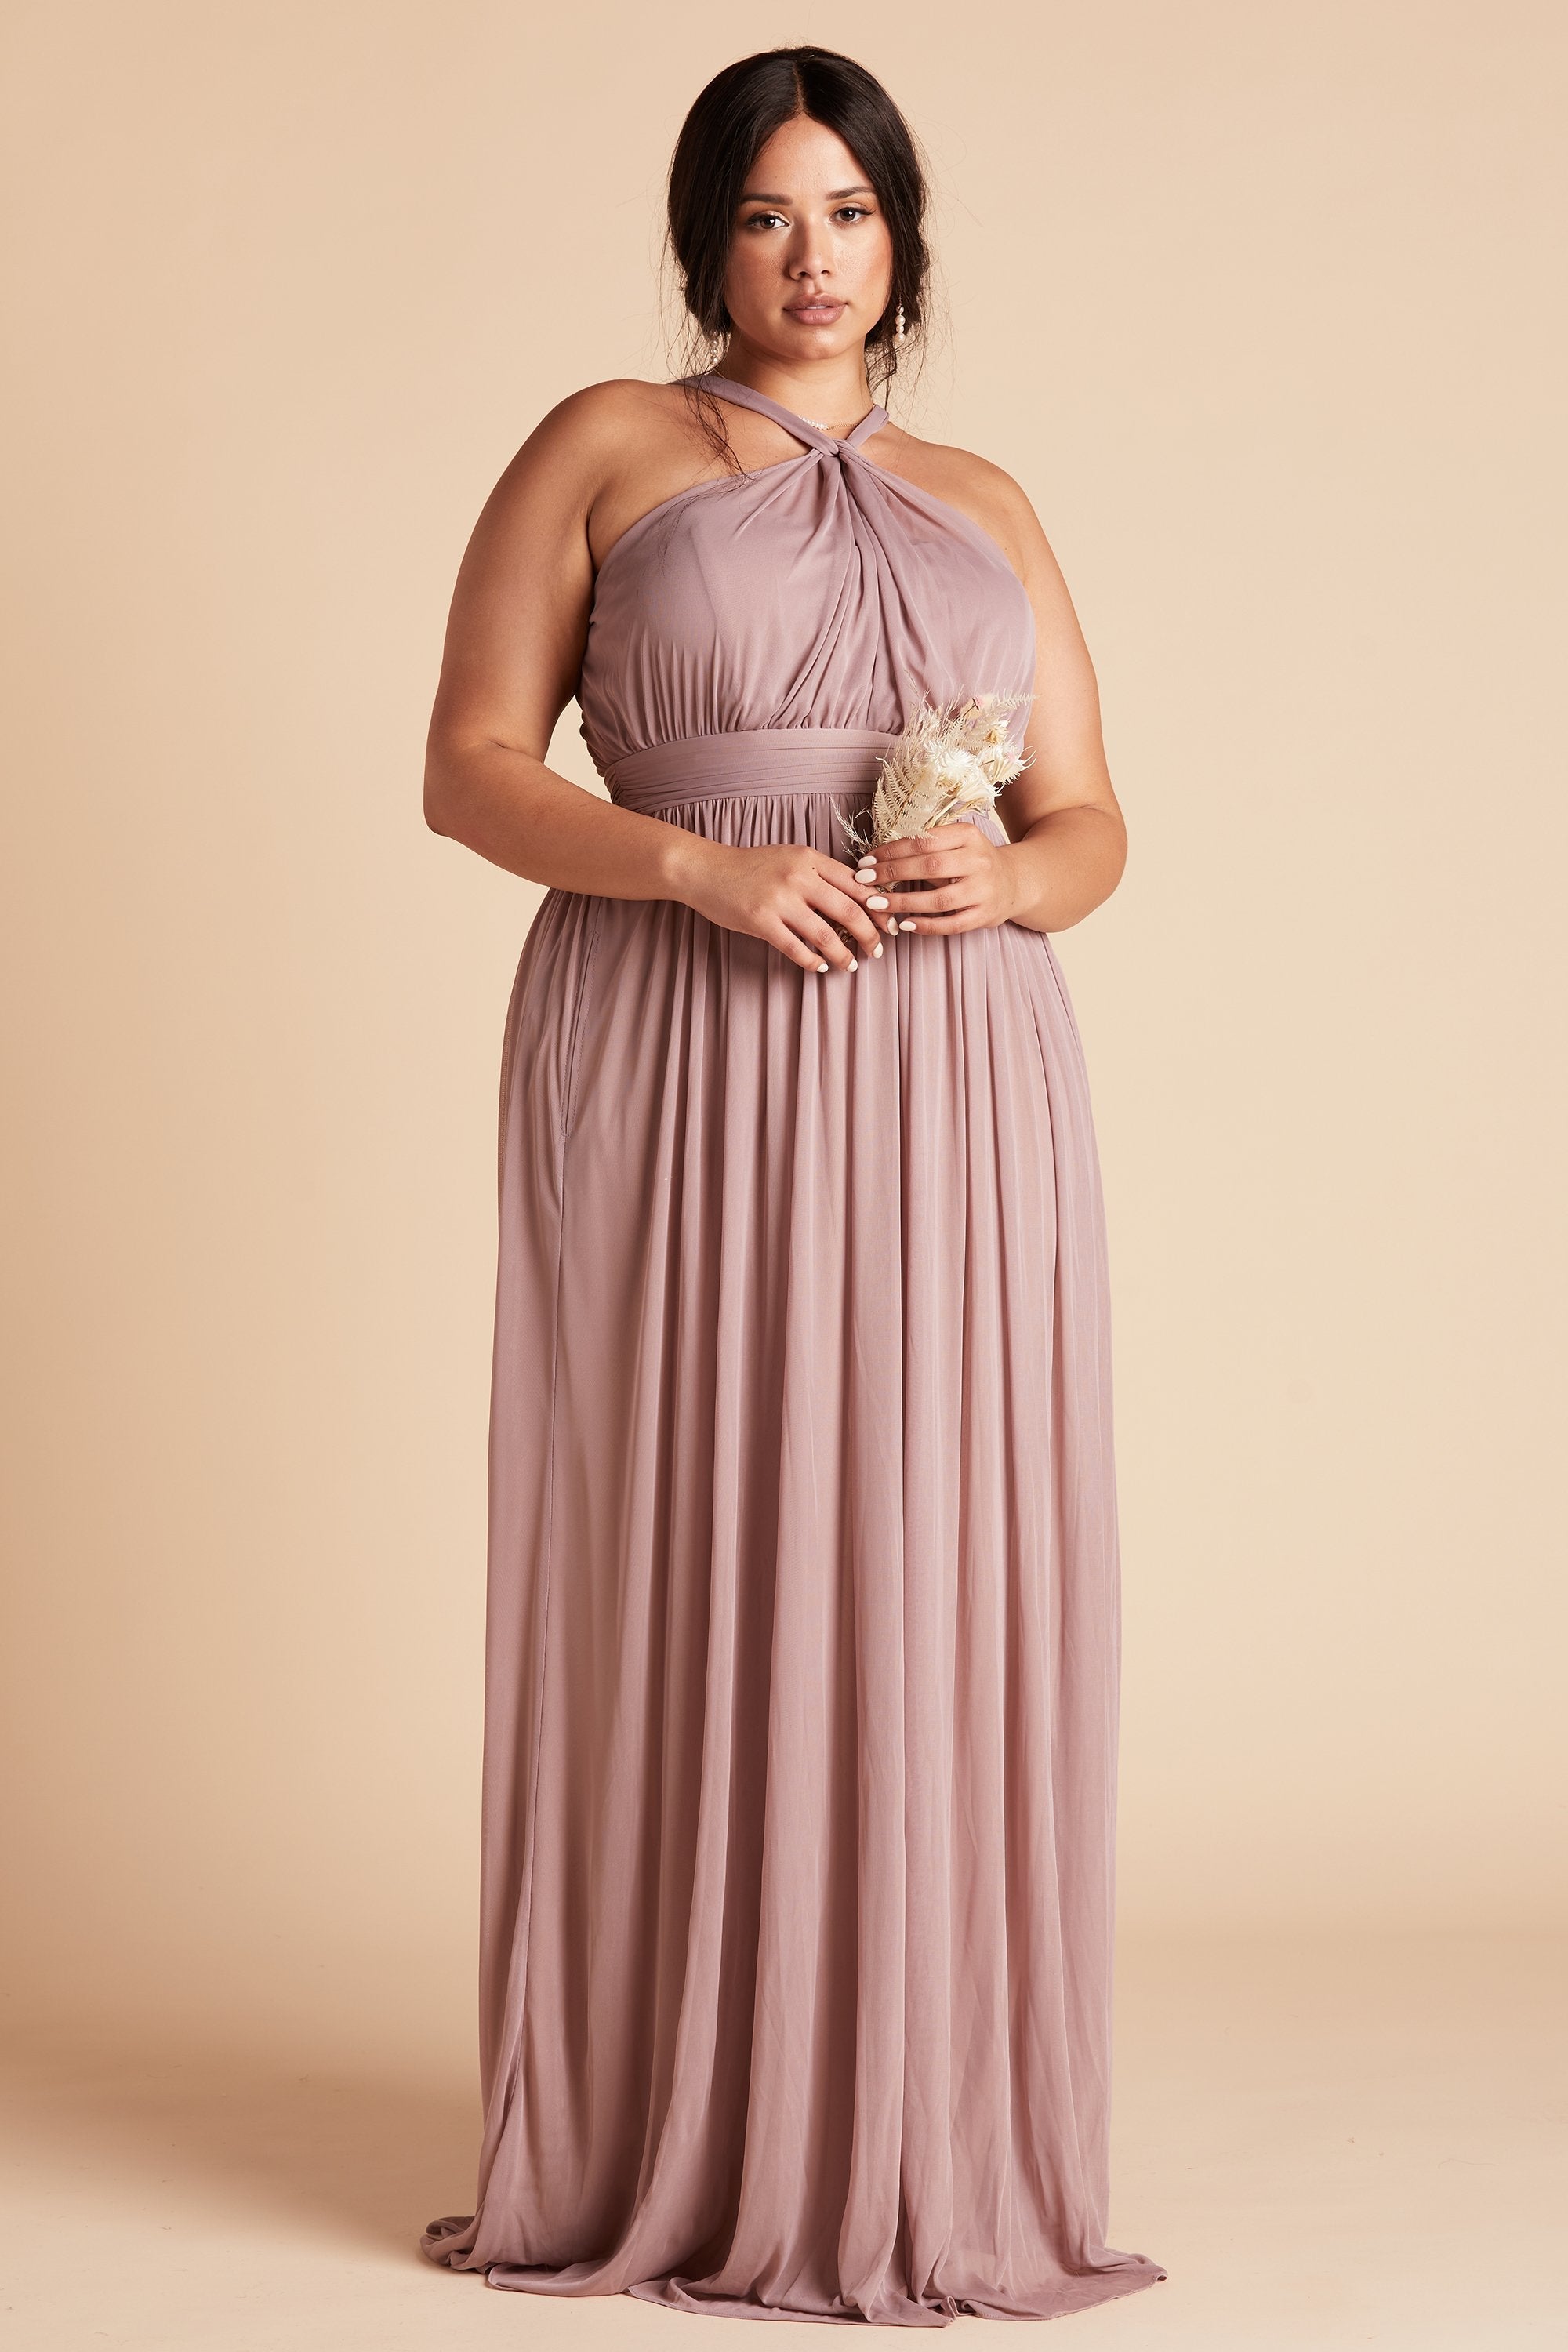 Kiko plus size bridesmaid dress in mauve pink chiffon by Birdy Grey, front view